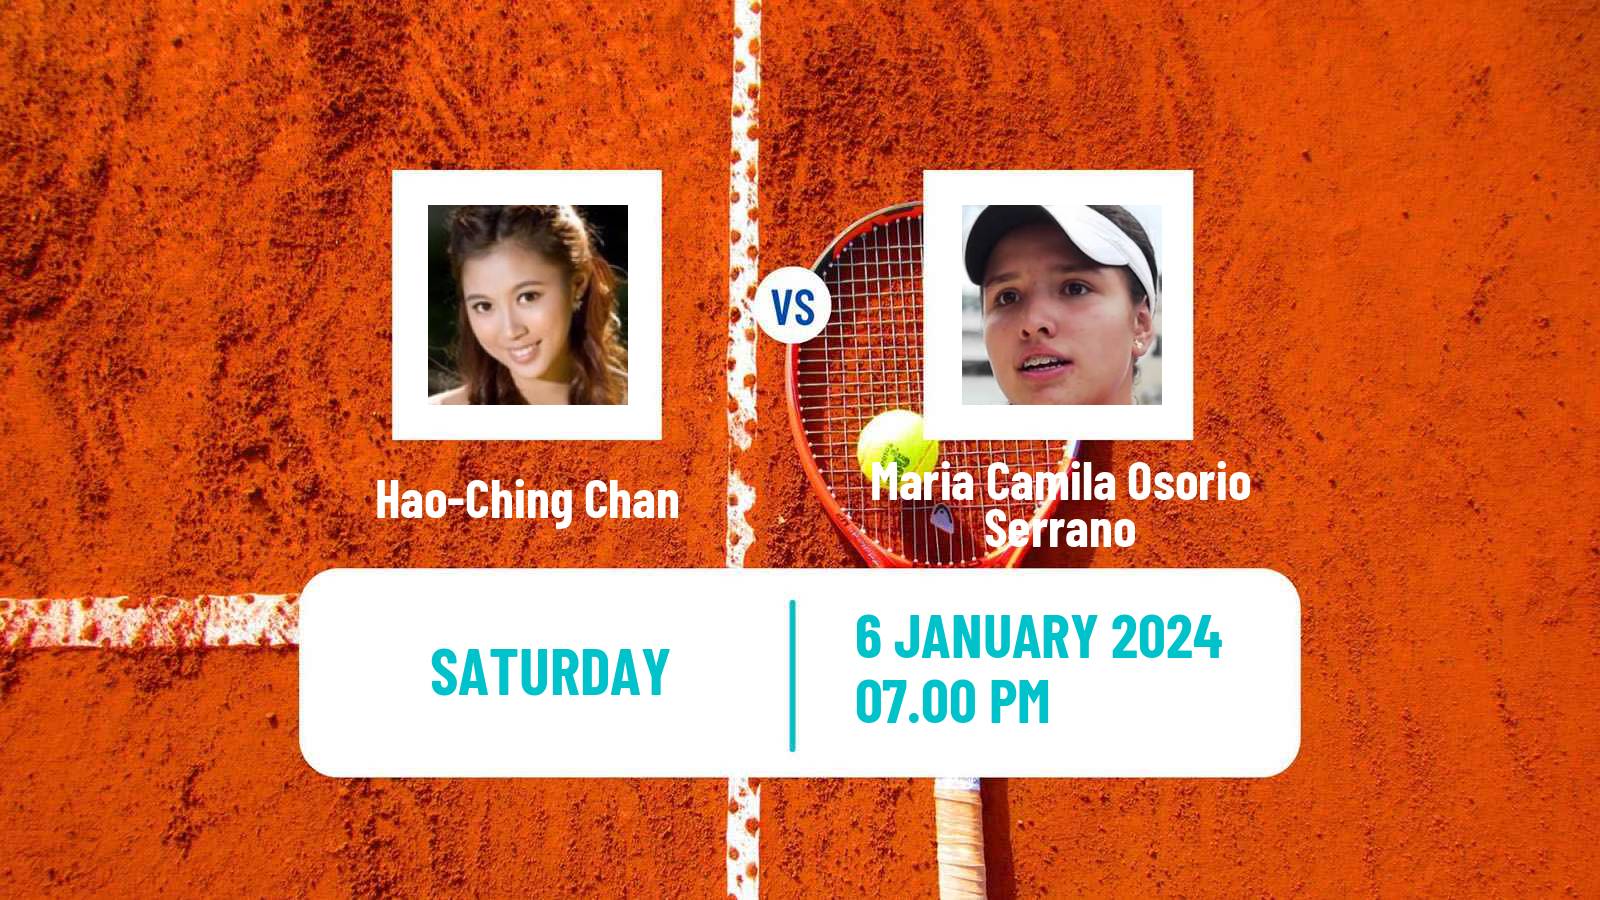 Tennis WTA Hobart Hao-Ching Chan - Maria Camila Osorio Serrano